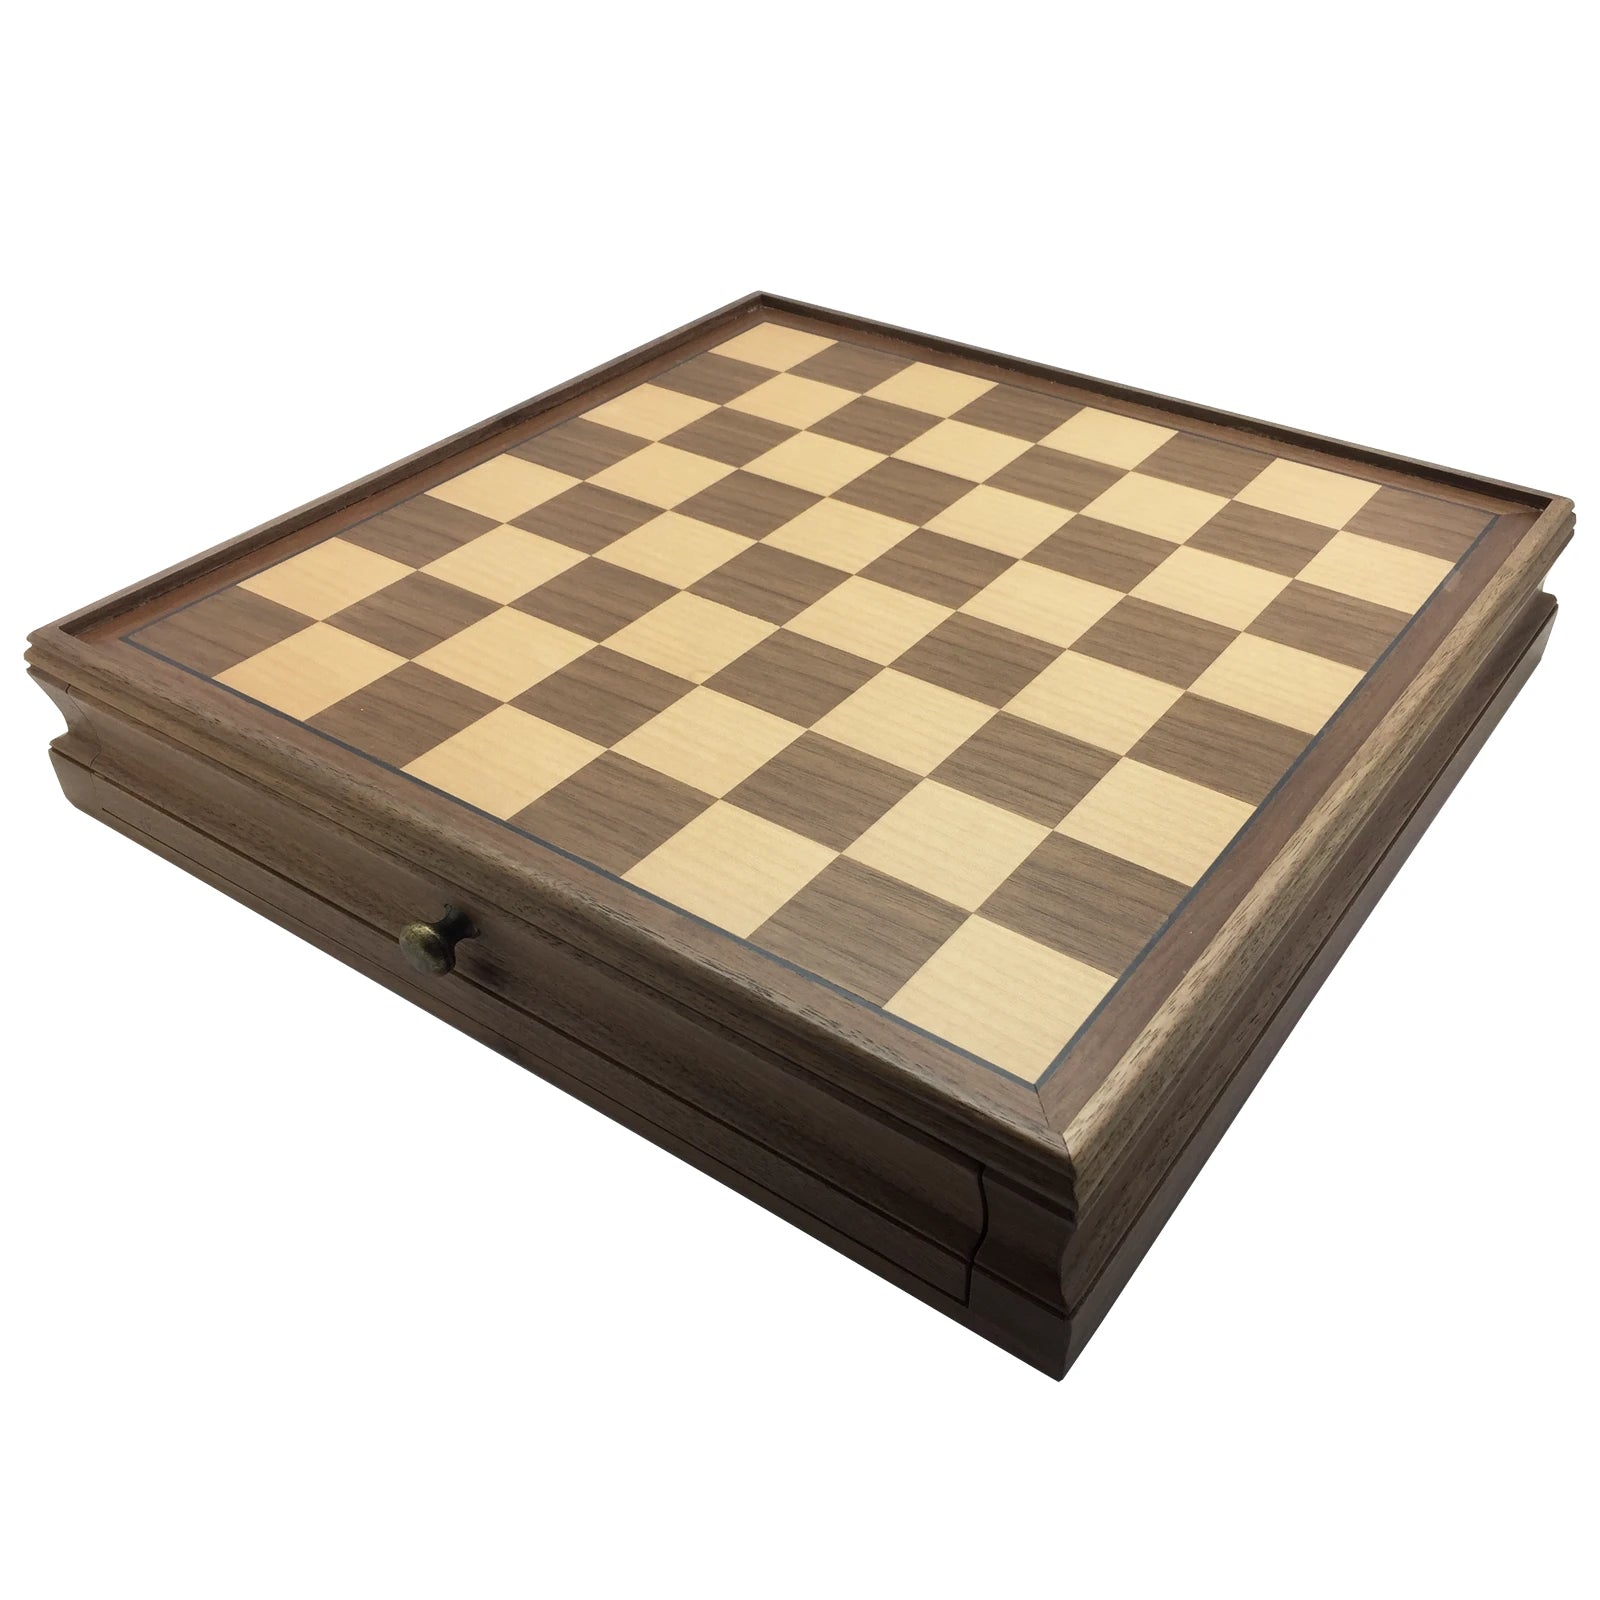 Wood chess board.